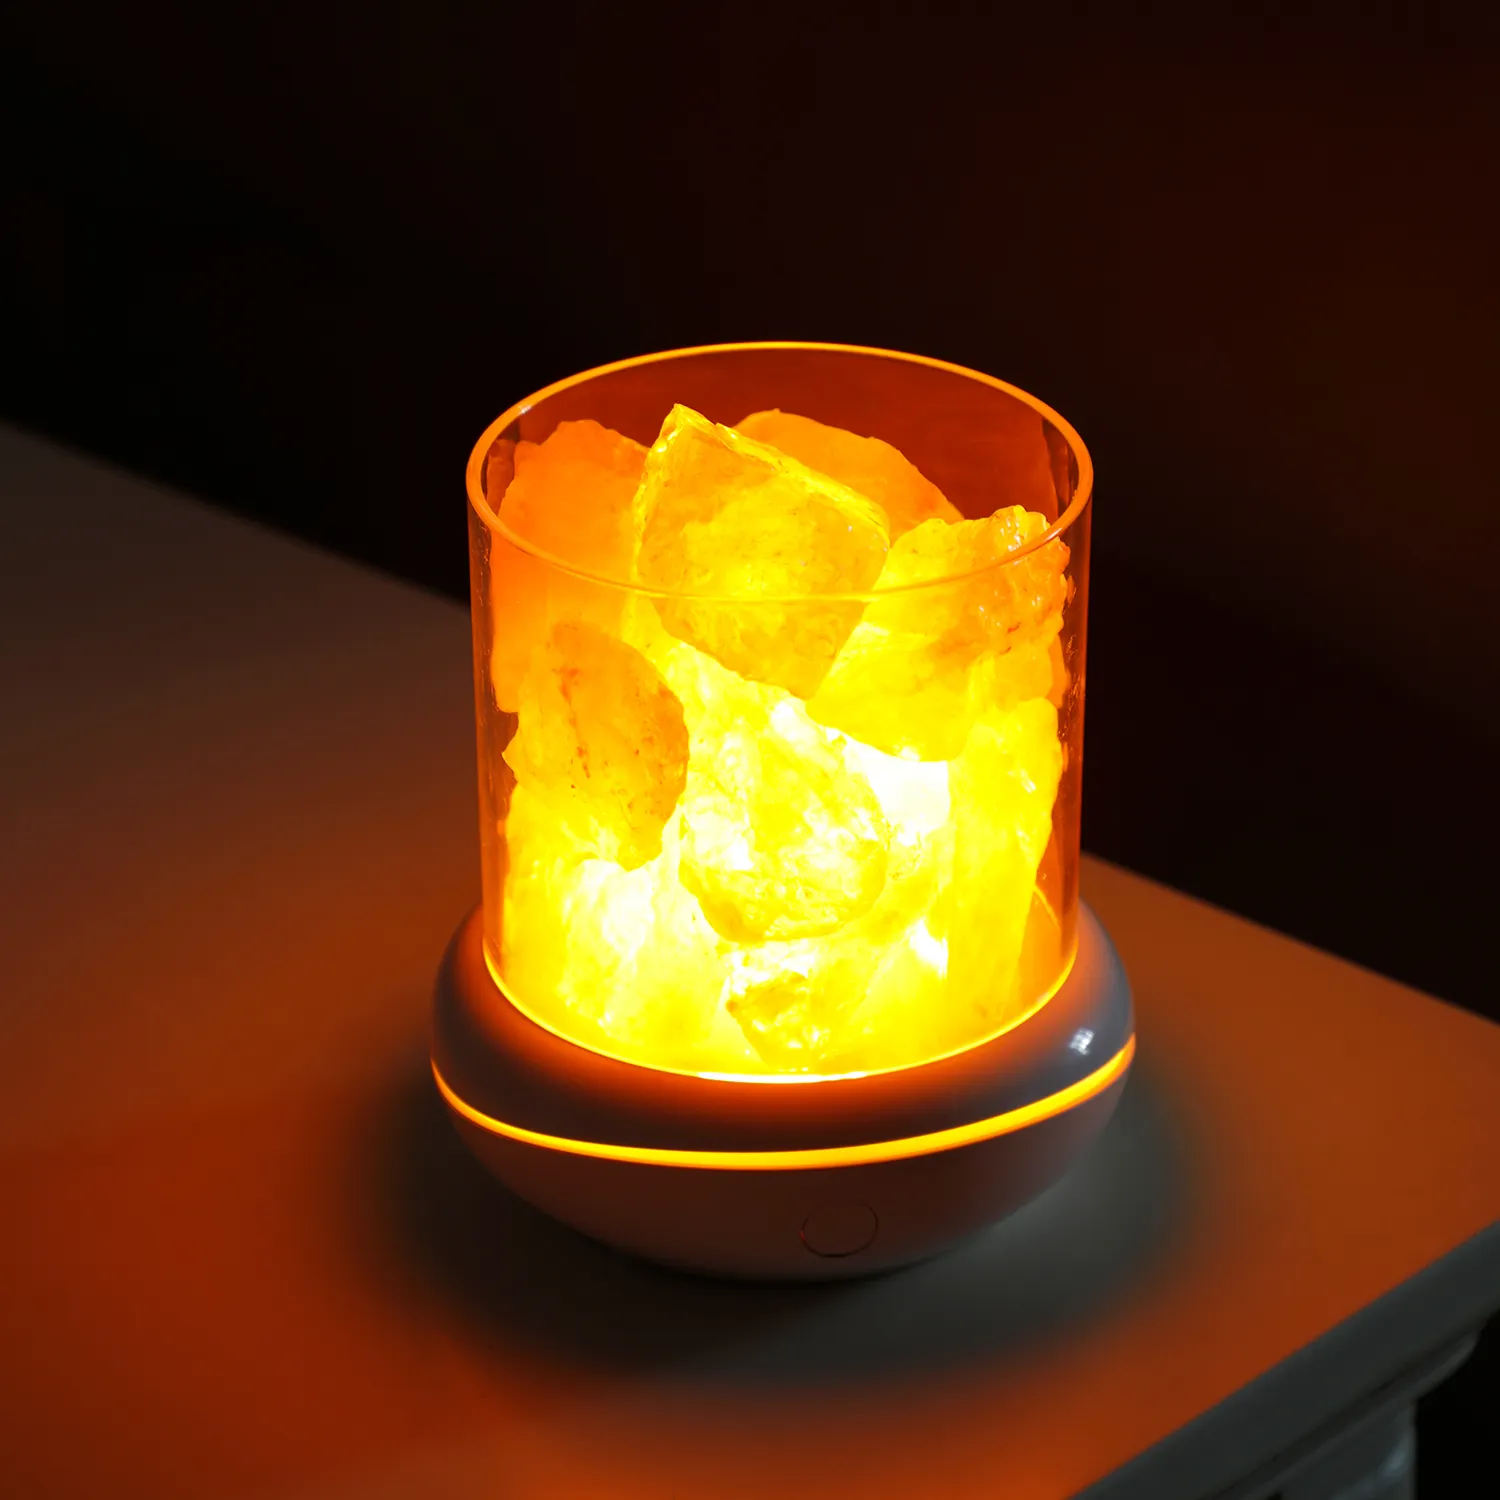 Holesale-difusor de aroma para habitación, luz led de cristal Rosa lectronic con USB natural, Alt Lamp del Himalaya